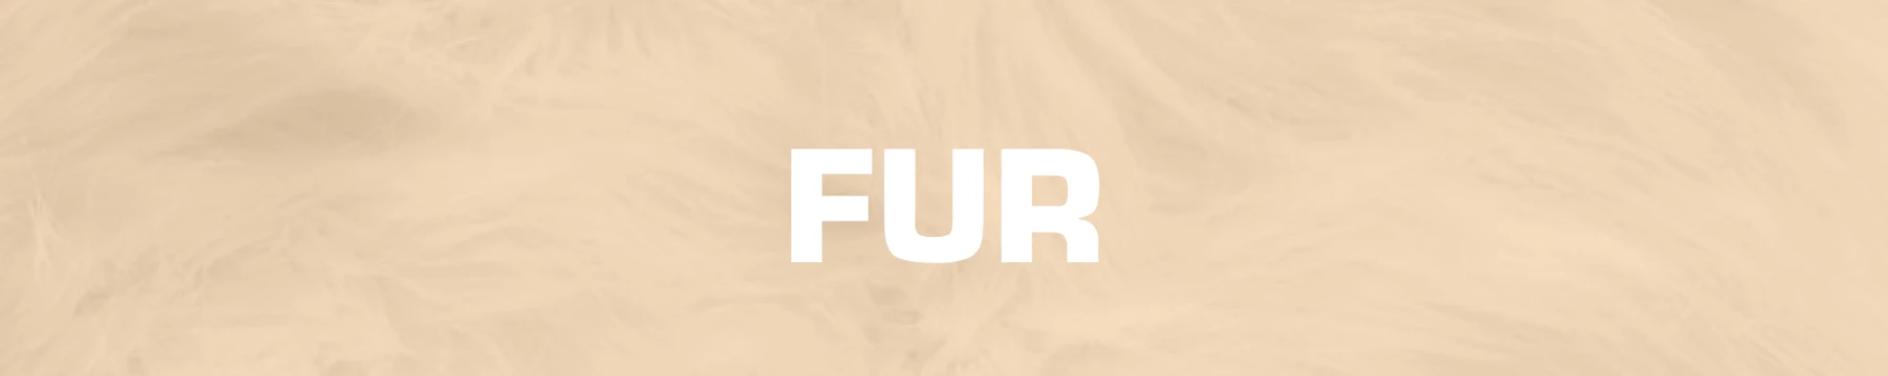 Furs